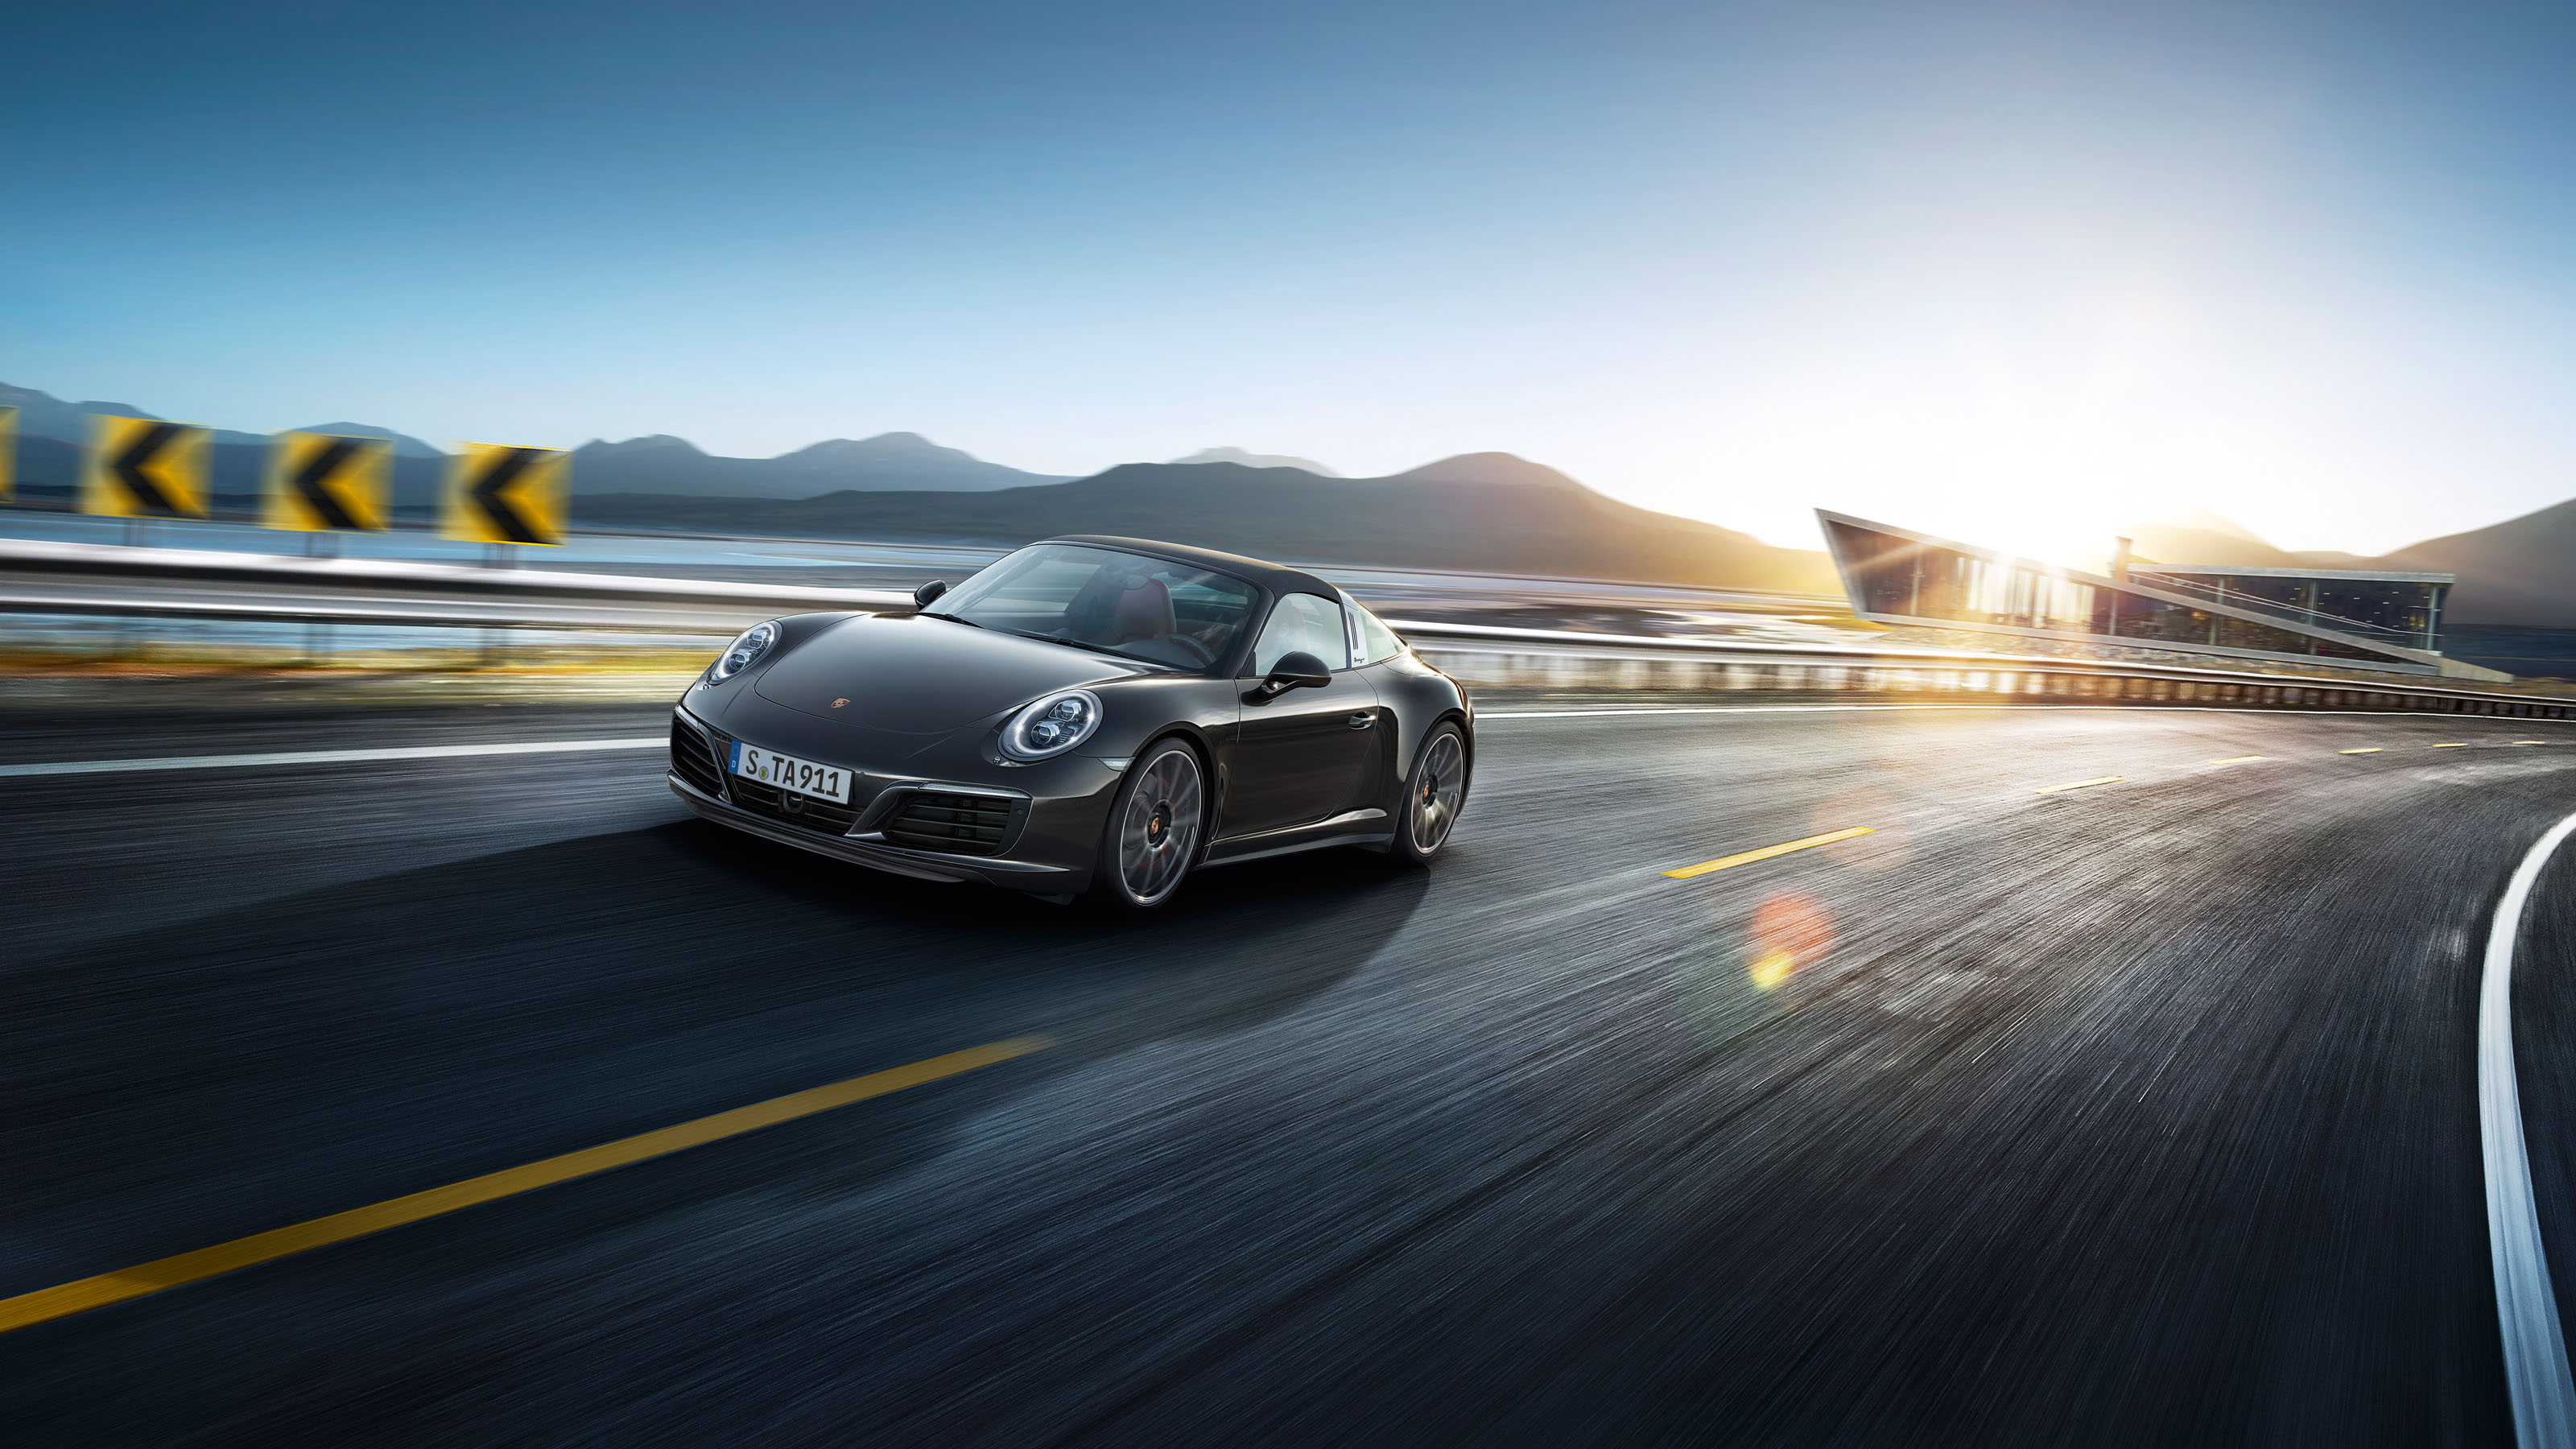 Descarga gratis la imagen Porsche, Coche, Porsche 911, Vehículos, Coche Negro, Porsche 911 Targa en el escritorio de tu PC